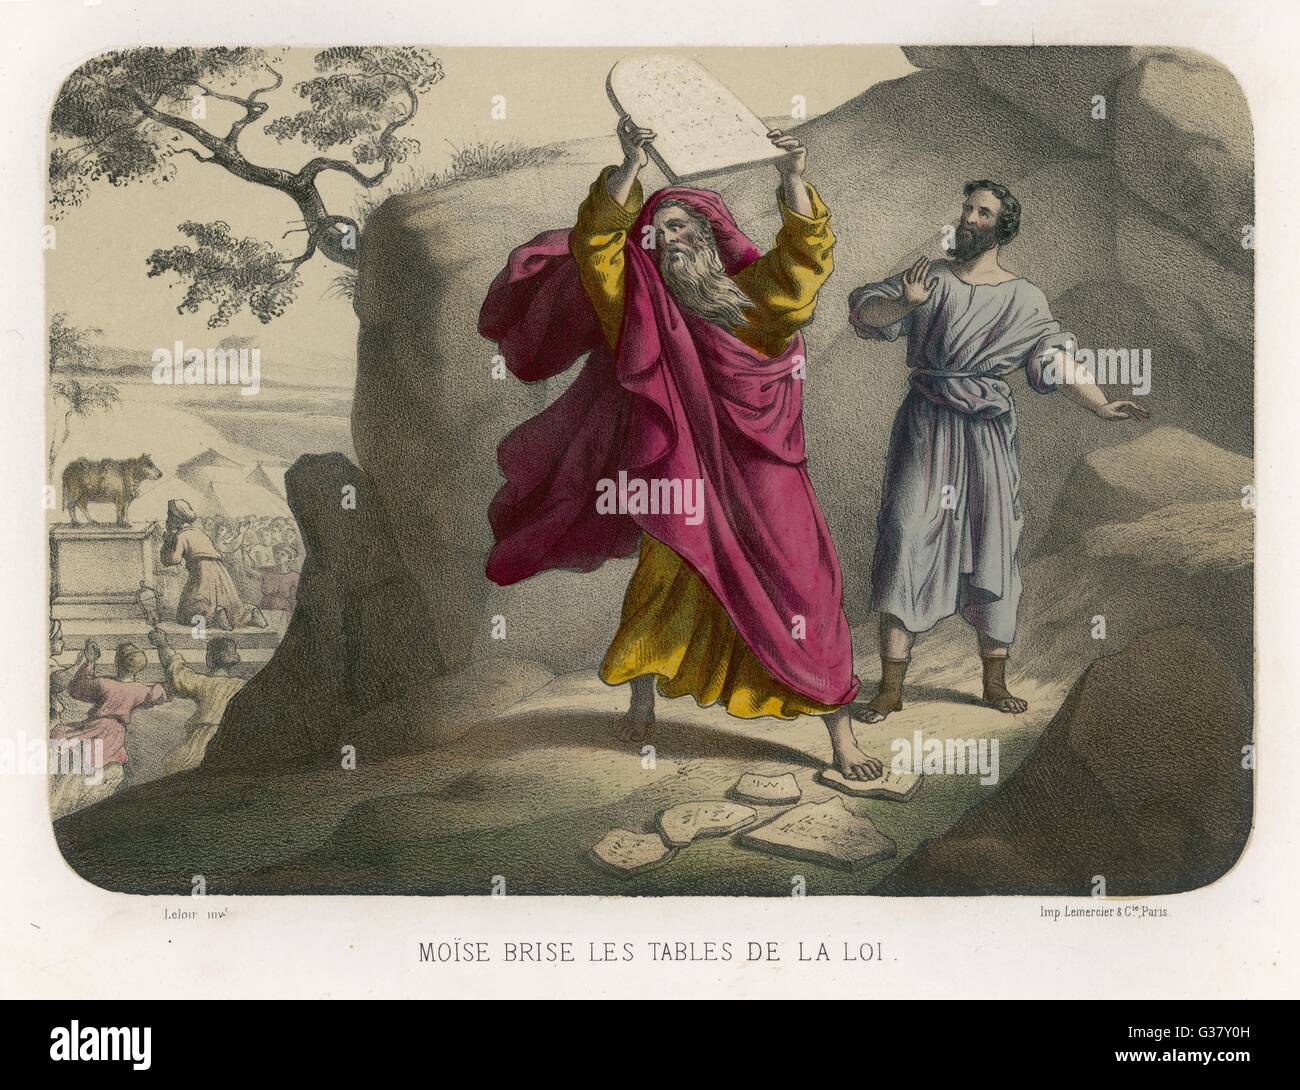 Scène de la Bible de l'ancien testament : Moïse et les dix commandements Banque D'Images